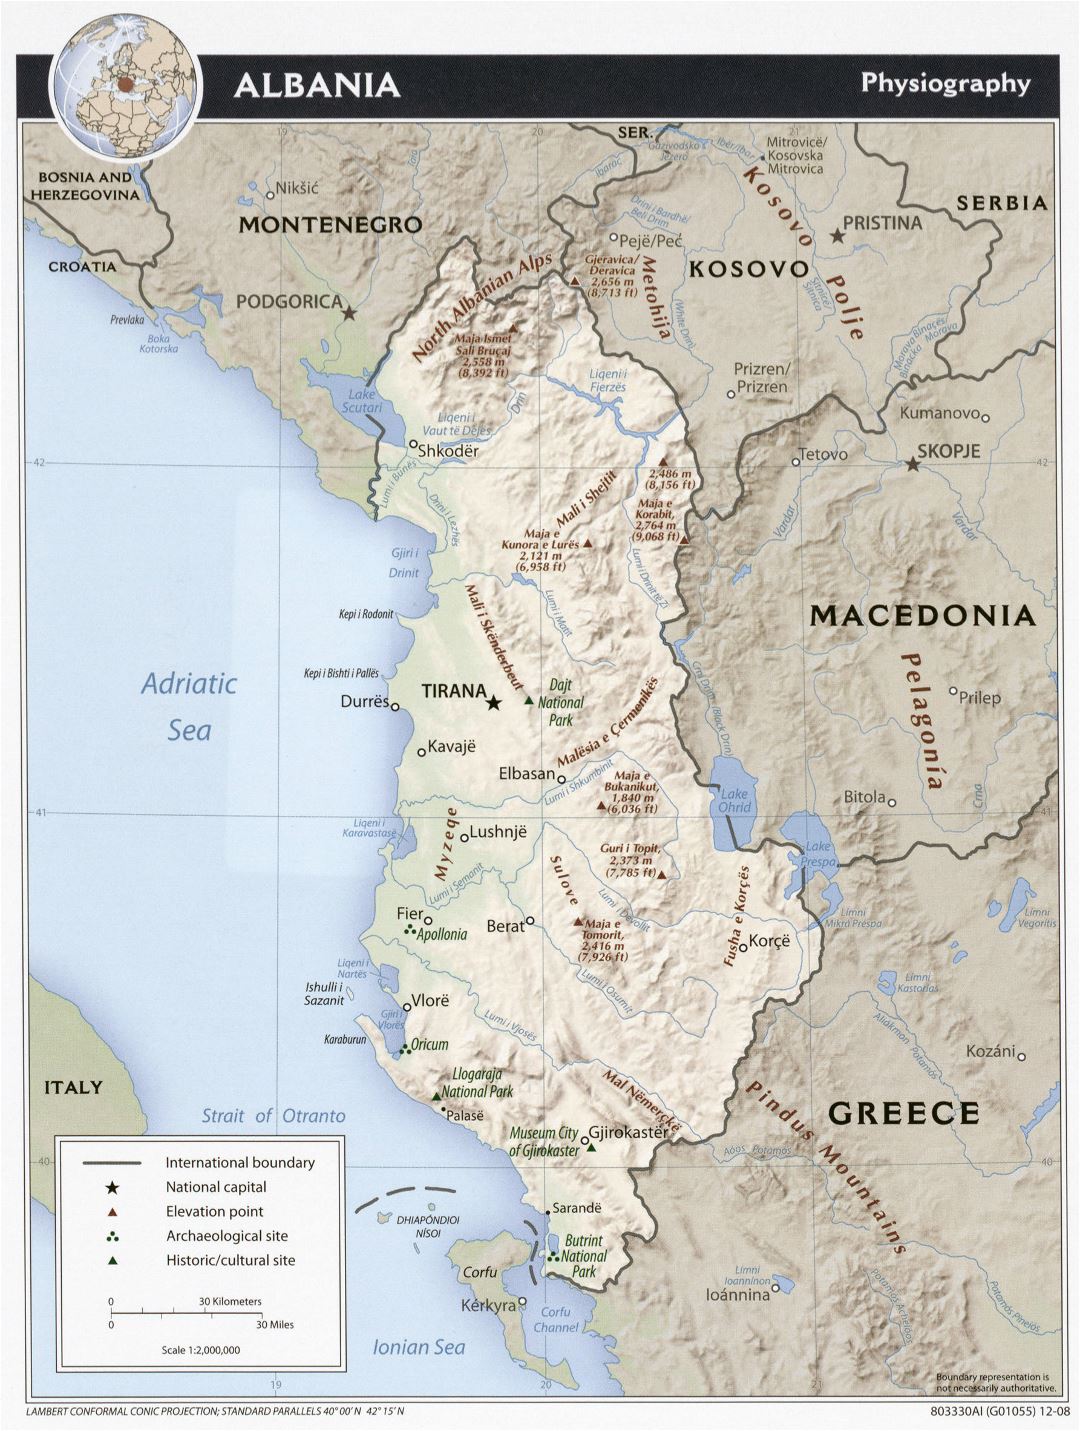 Mapa grande fisiografía detallada de Albania - 2008